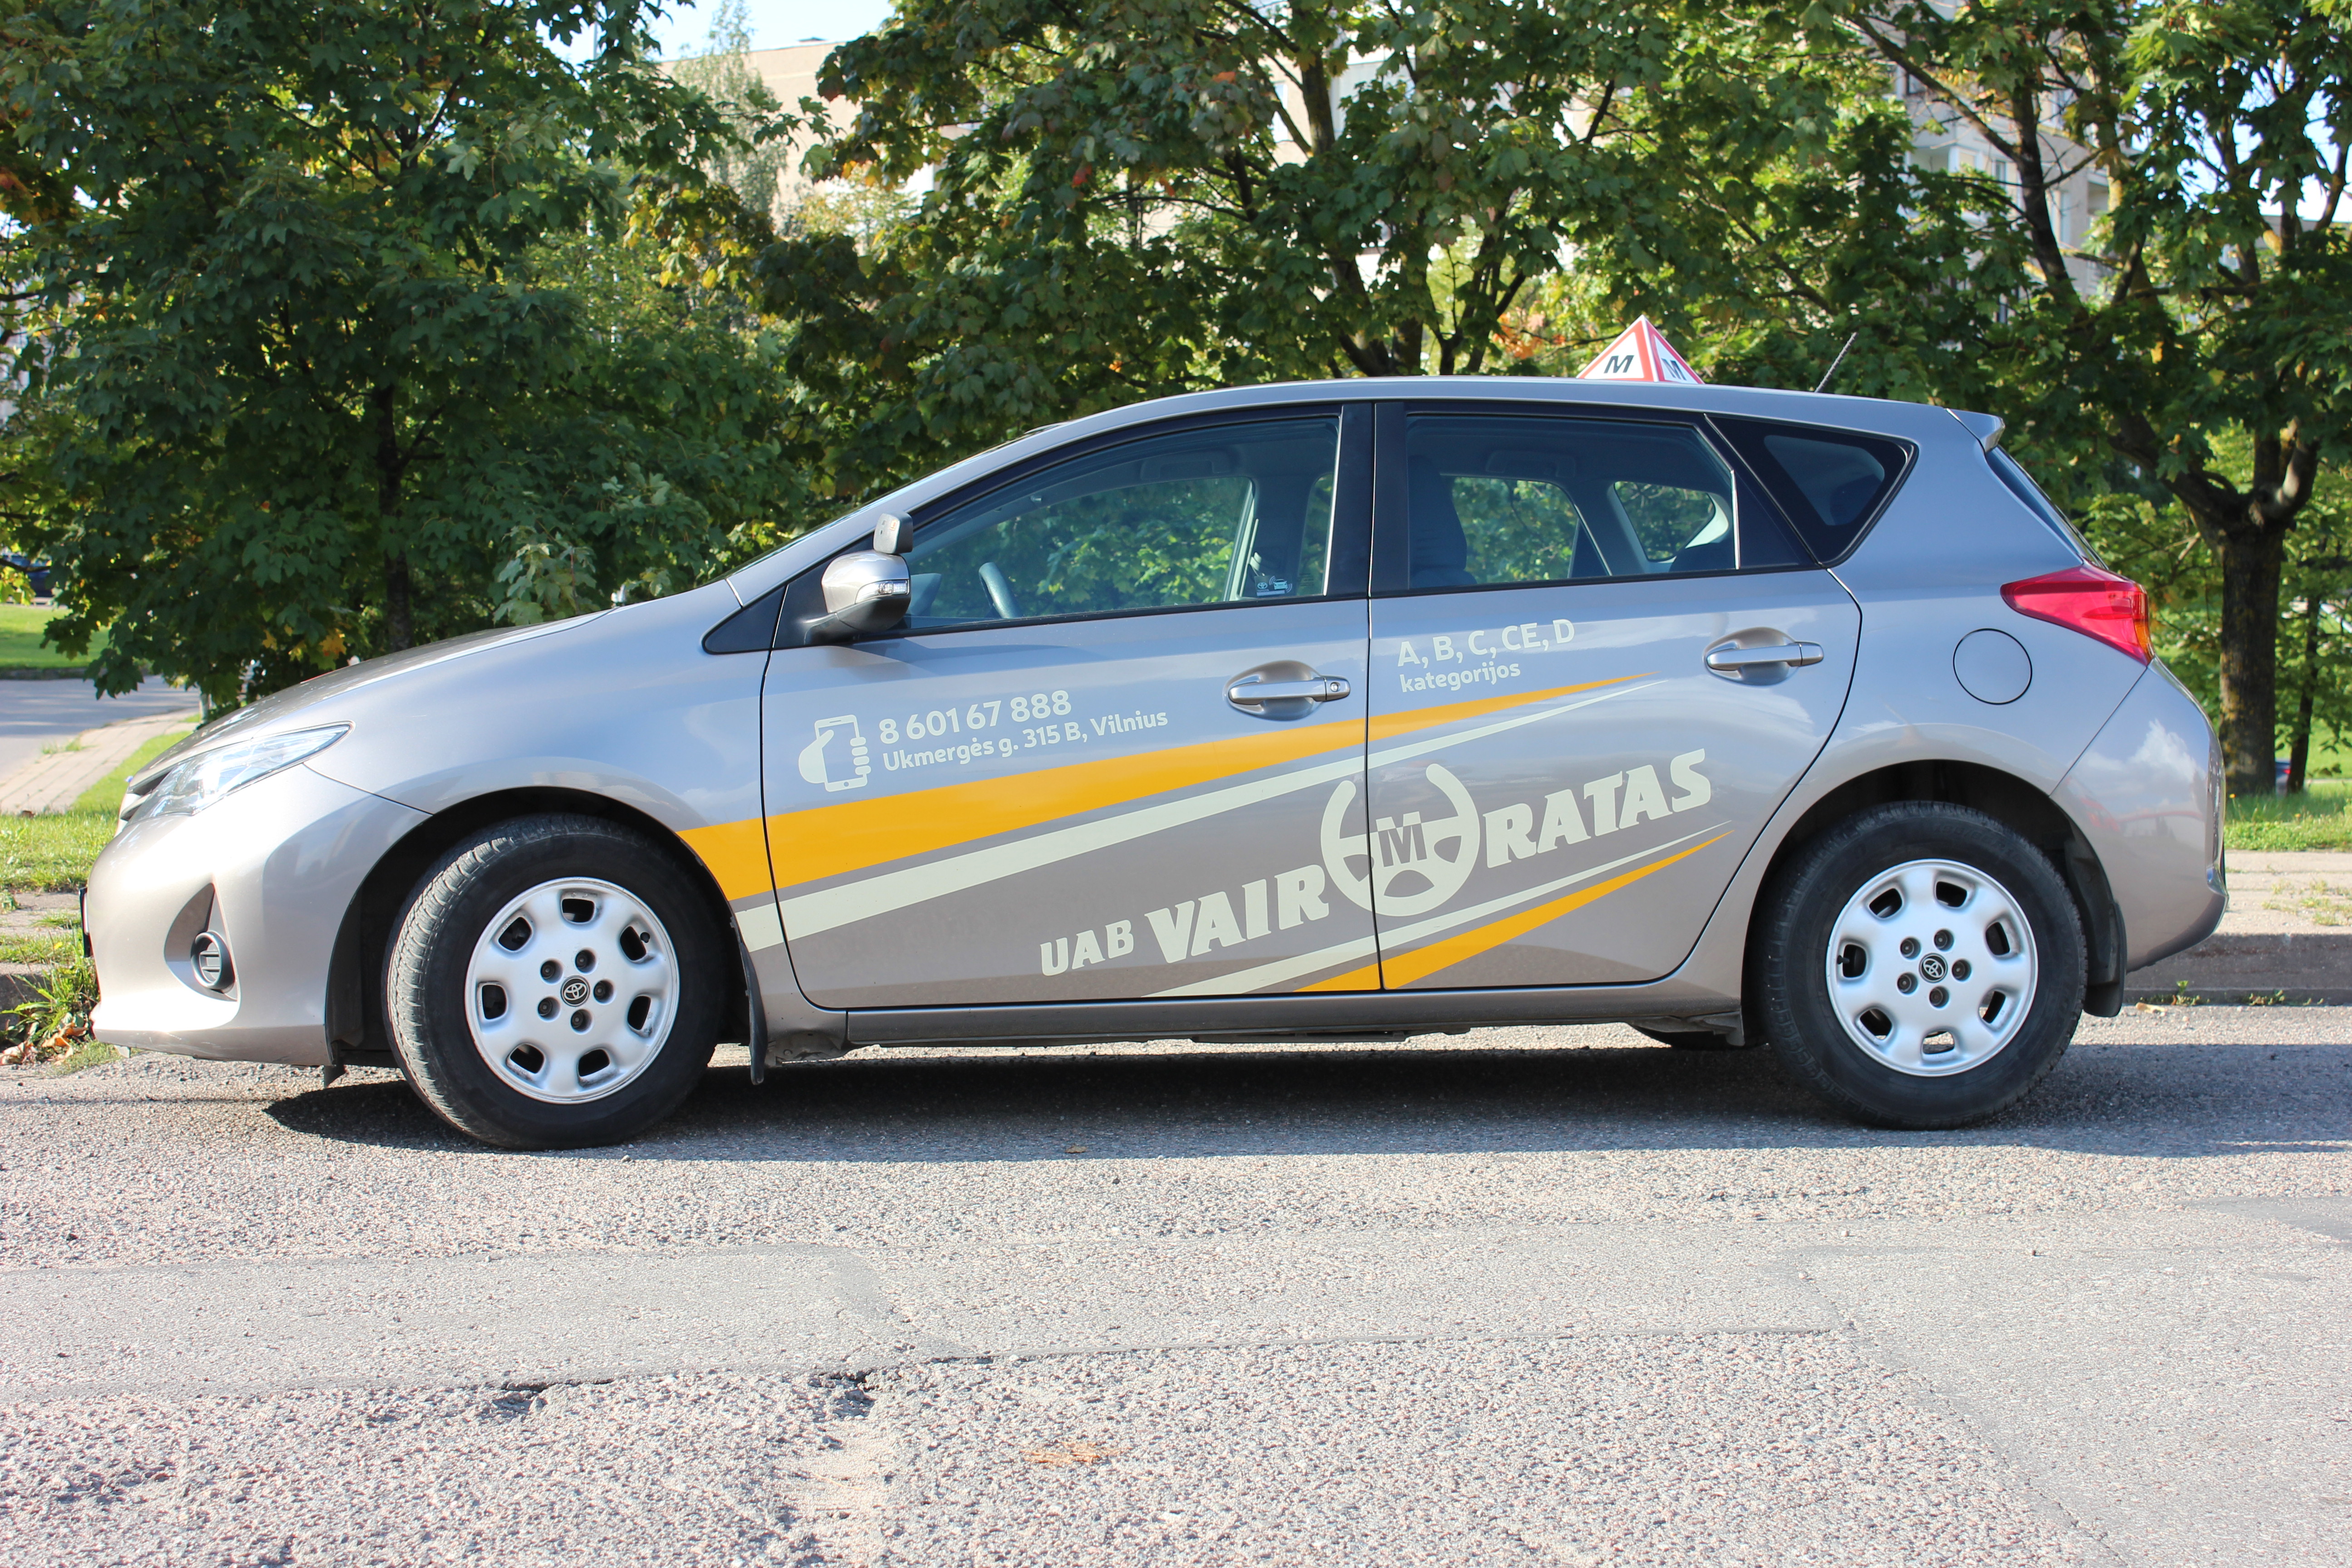 Vairavimo mokyklos Vilniuje „Vairo Ratas“ Toyota markės automobilis